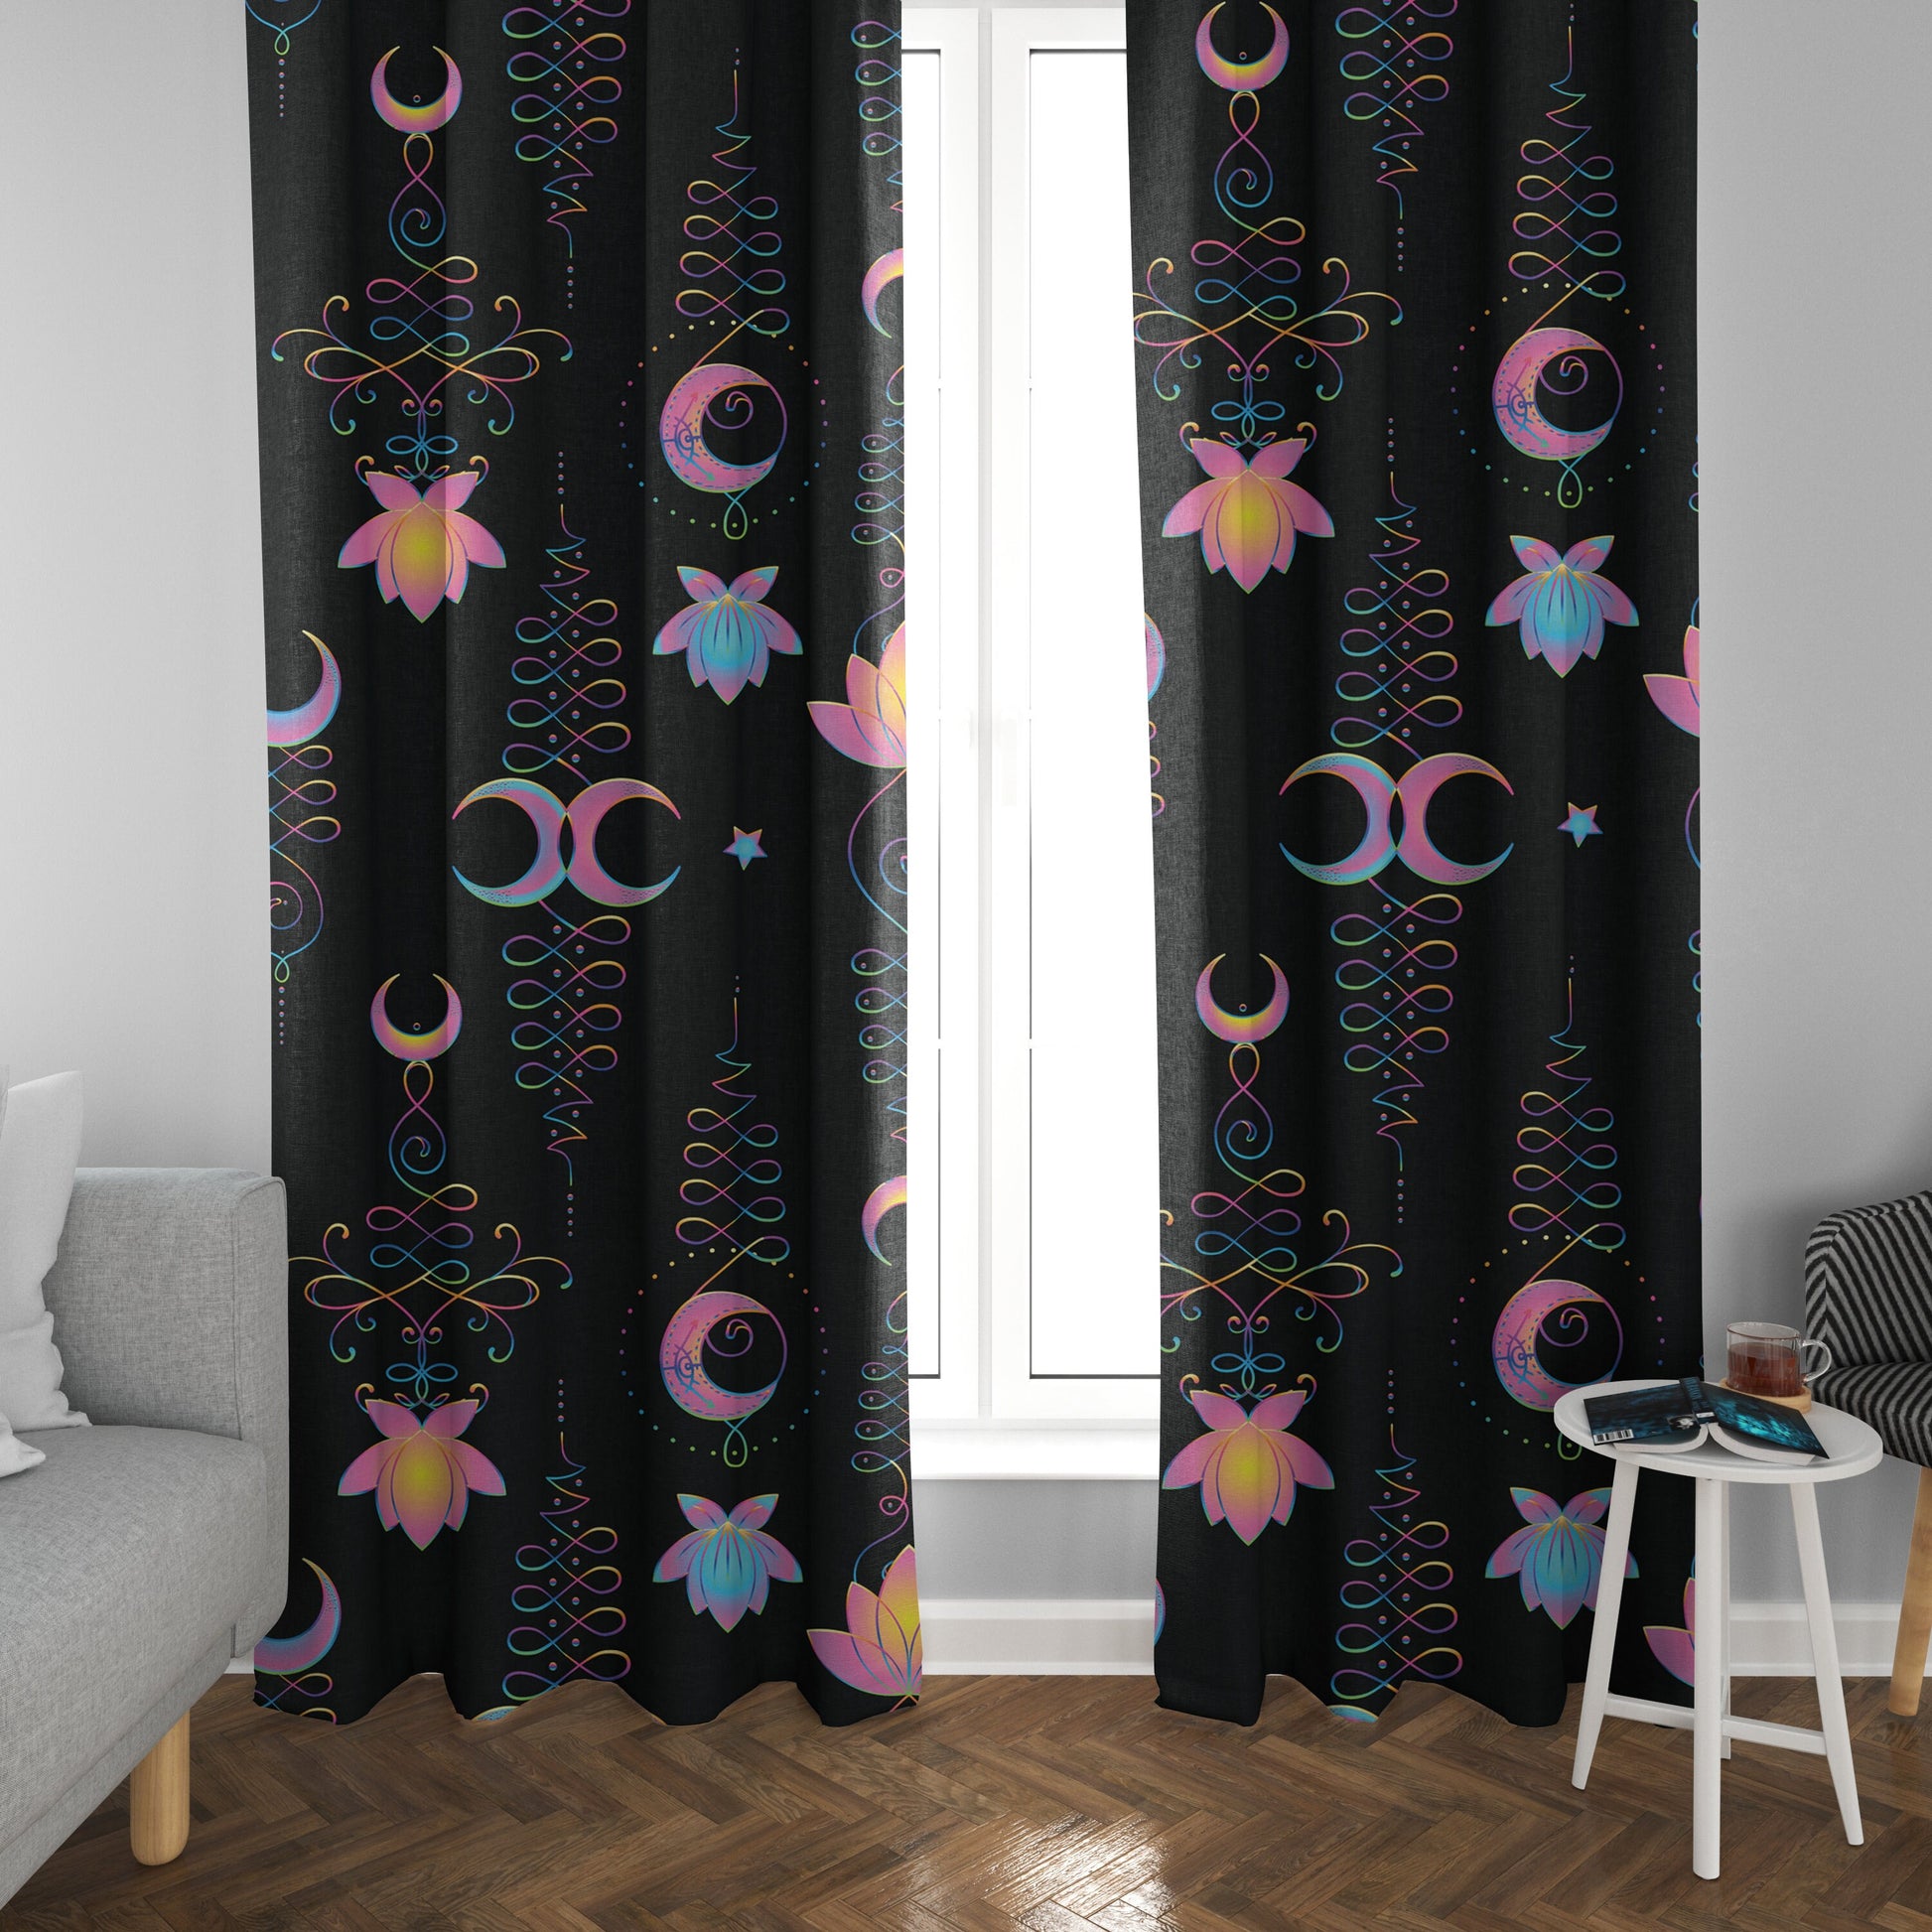 Unalome Lotus Flower Window Curtain colorful Drapery Curtain Panels black pink window treatment curtains